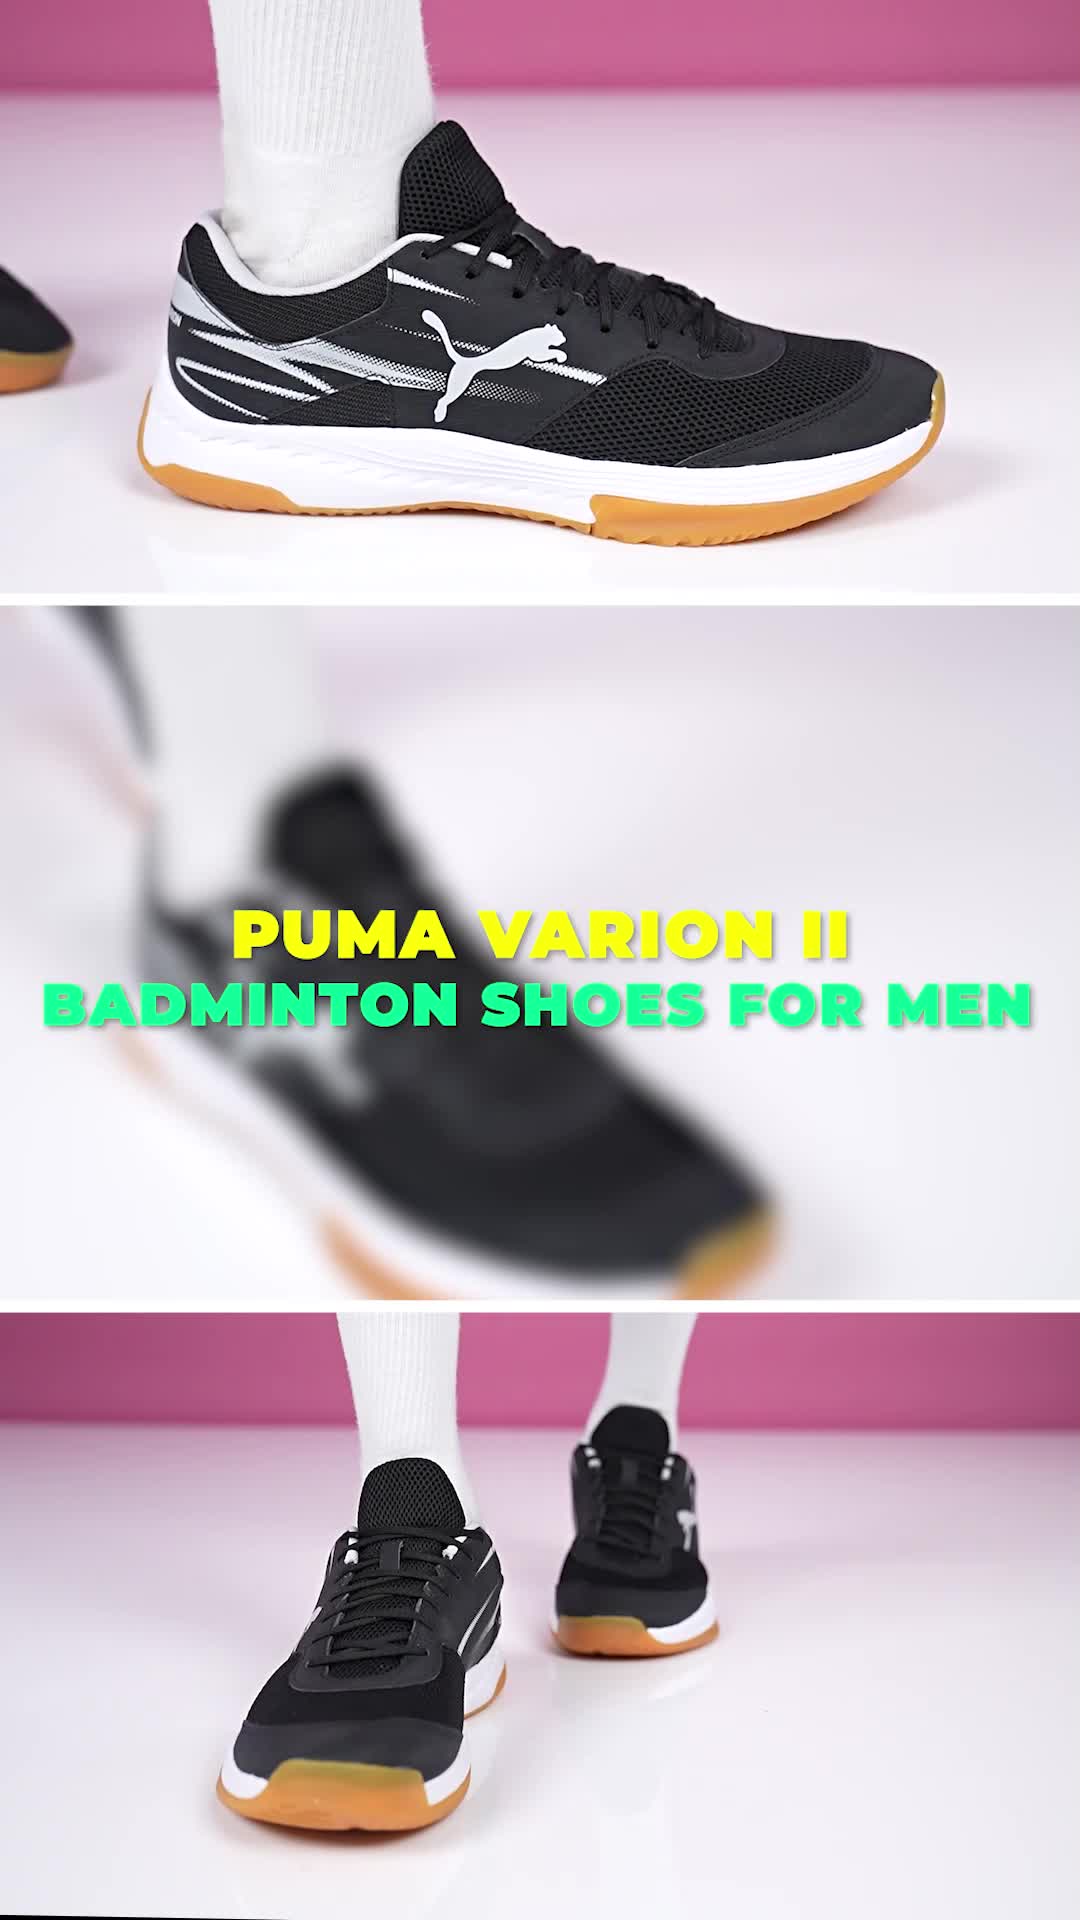 PUMA Varion II Badminton Shoes For Men - Buy PUMA Varion II Badminton Shoes  For Men Online at Best Price - Shop Online for Footwears in India